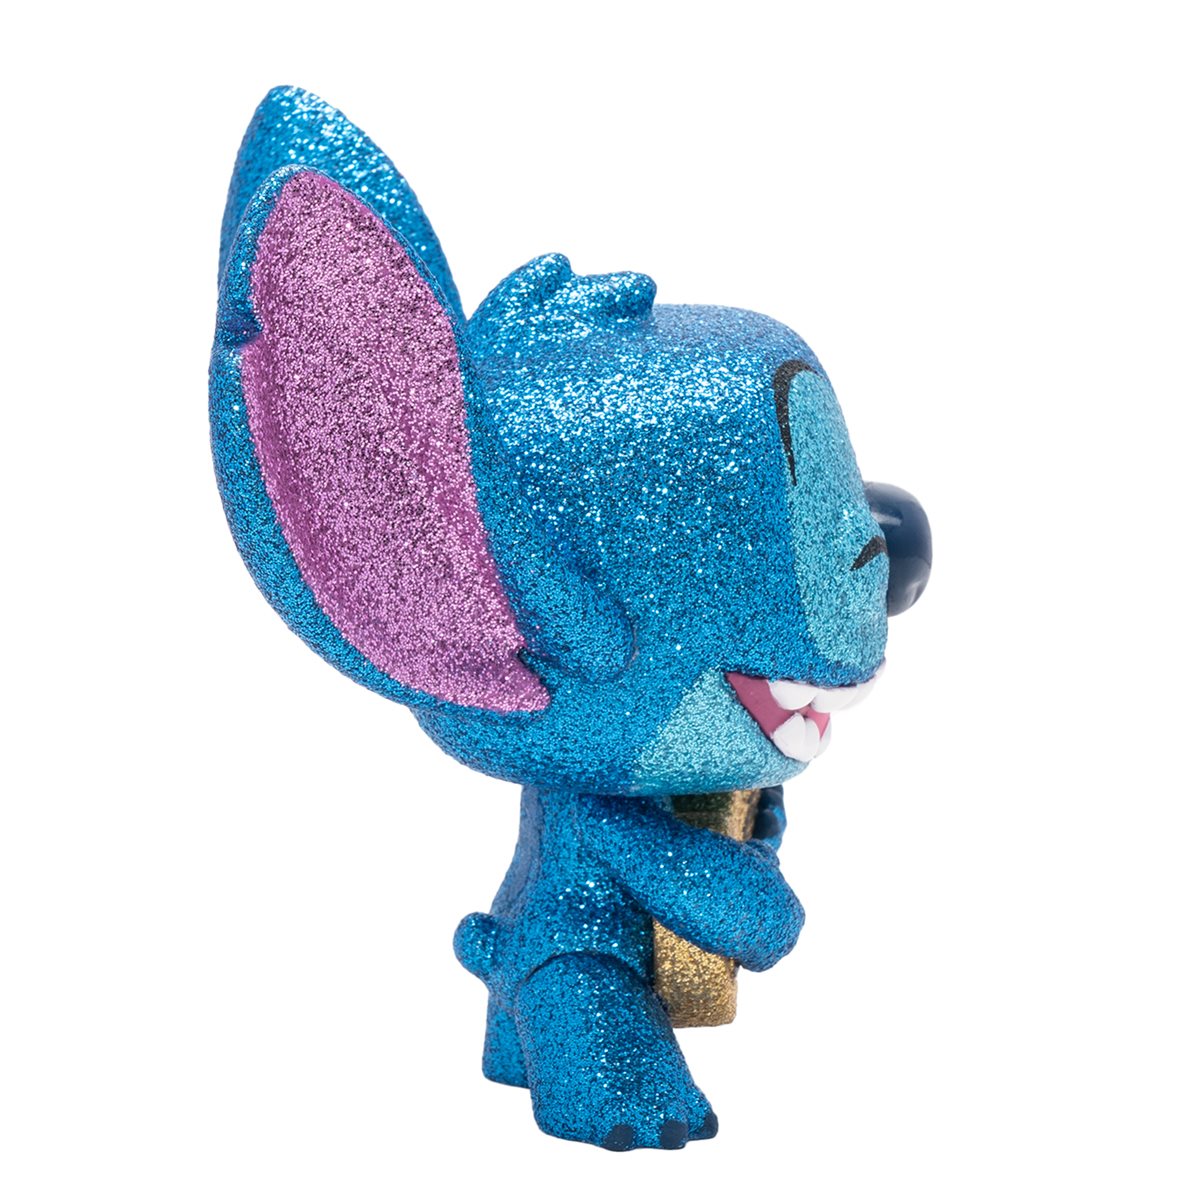 Lilo & Stitch Stitch with Ukulele Diamond Glitter Funko Pop! Vinyl Figure - Entertainment Earth Exclusive